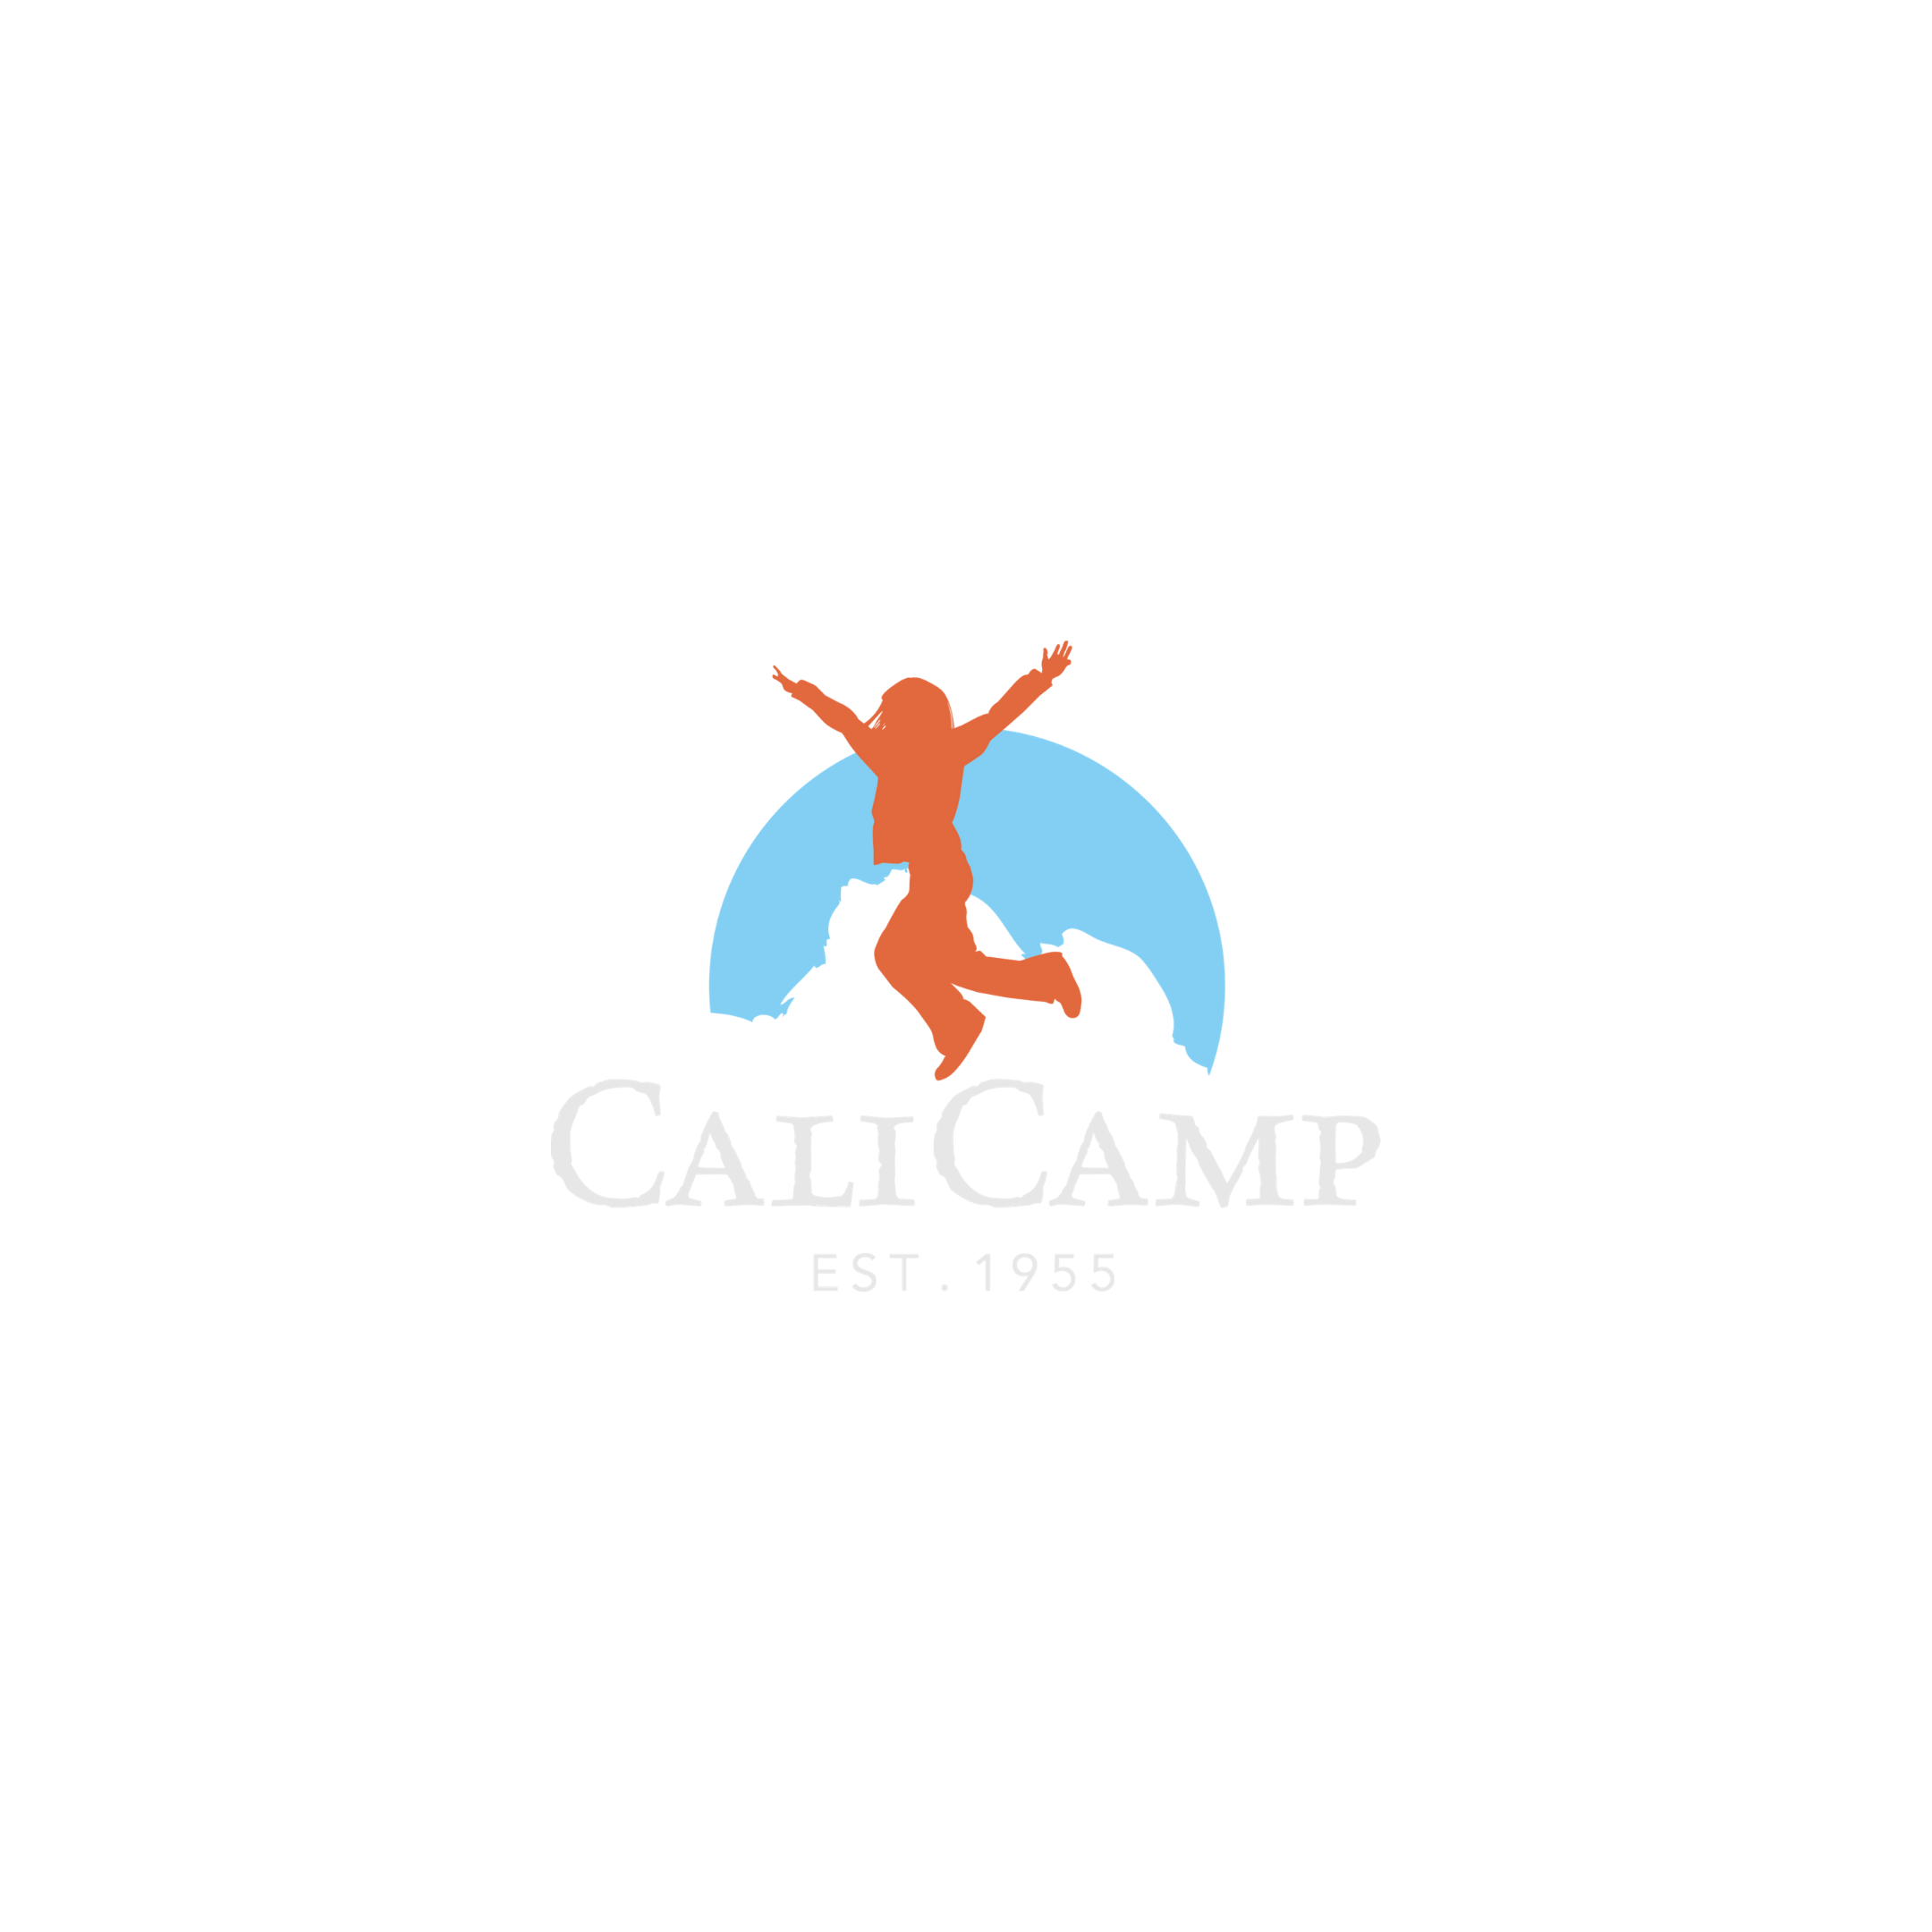 CALI CAMP